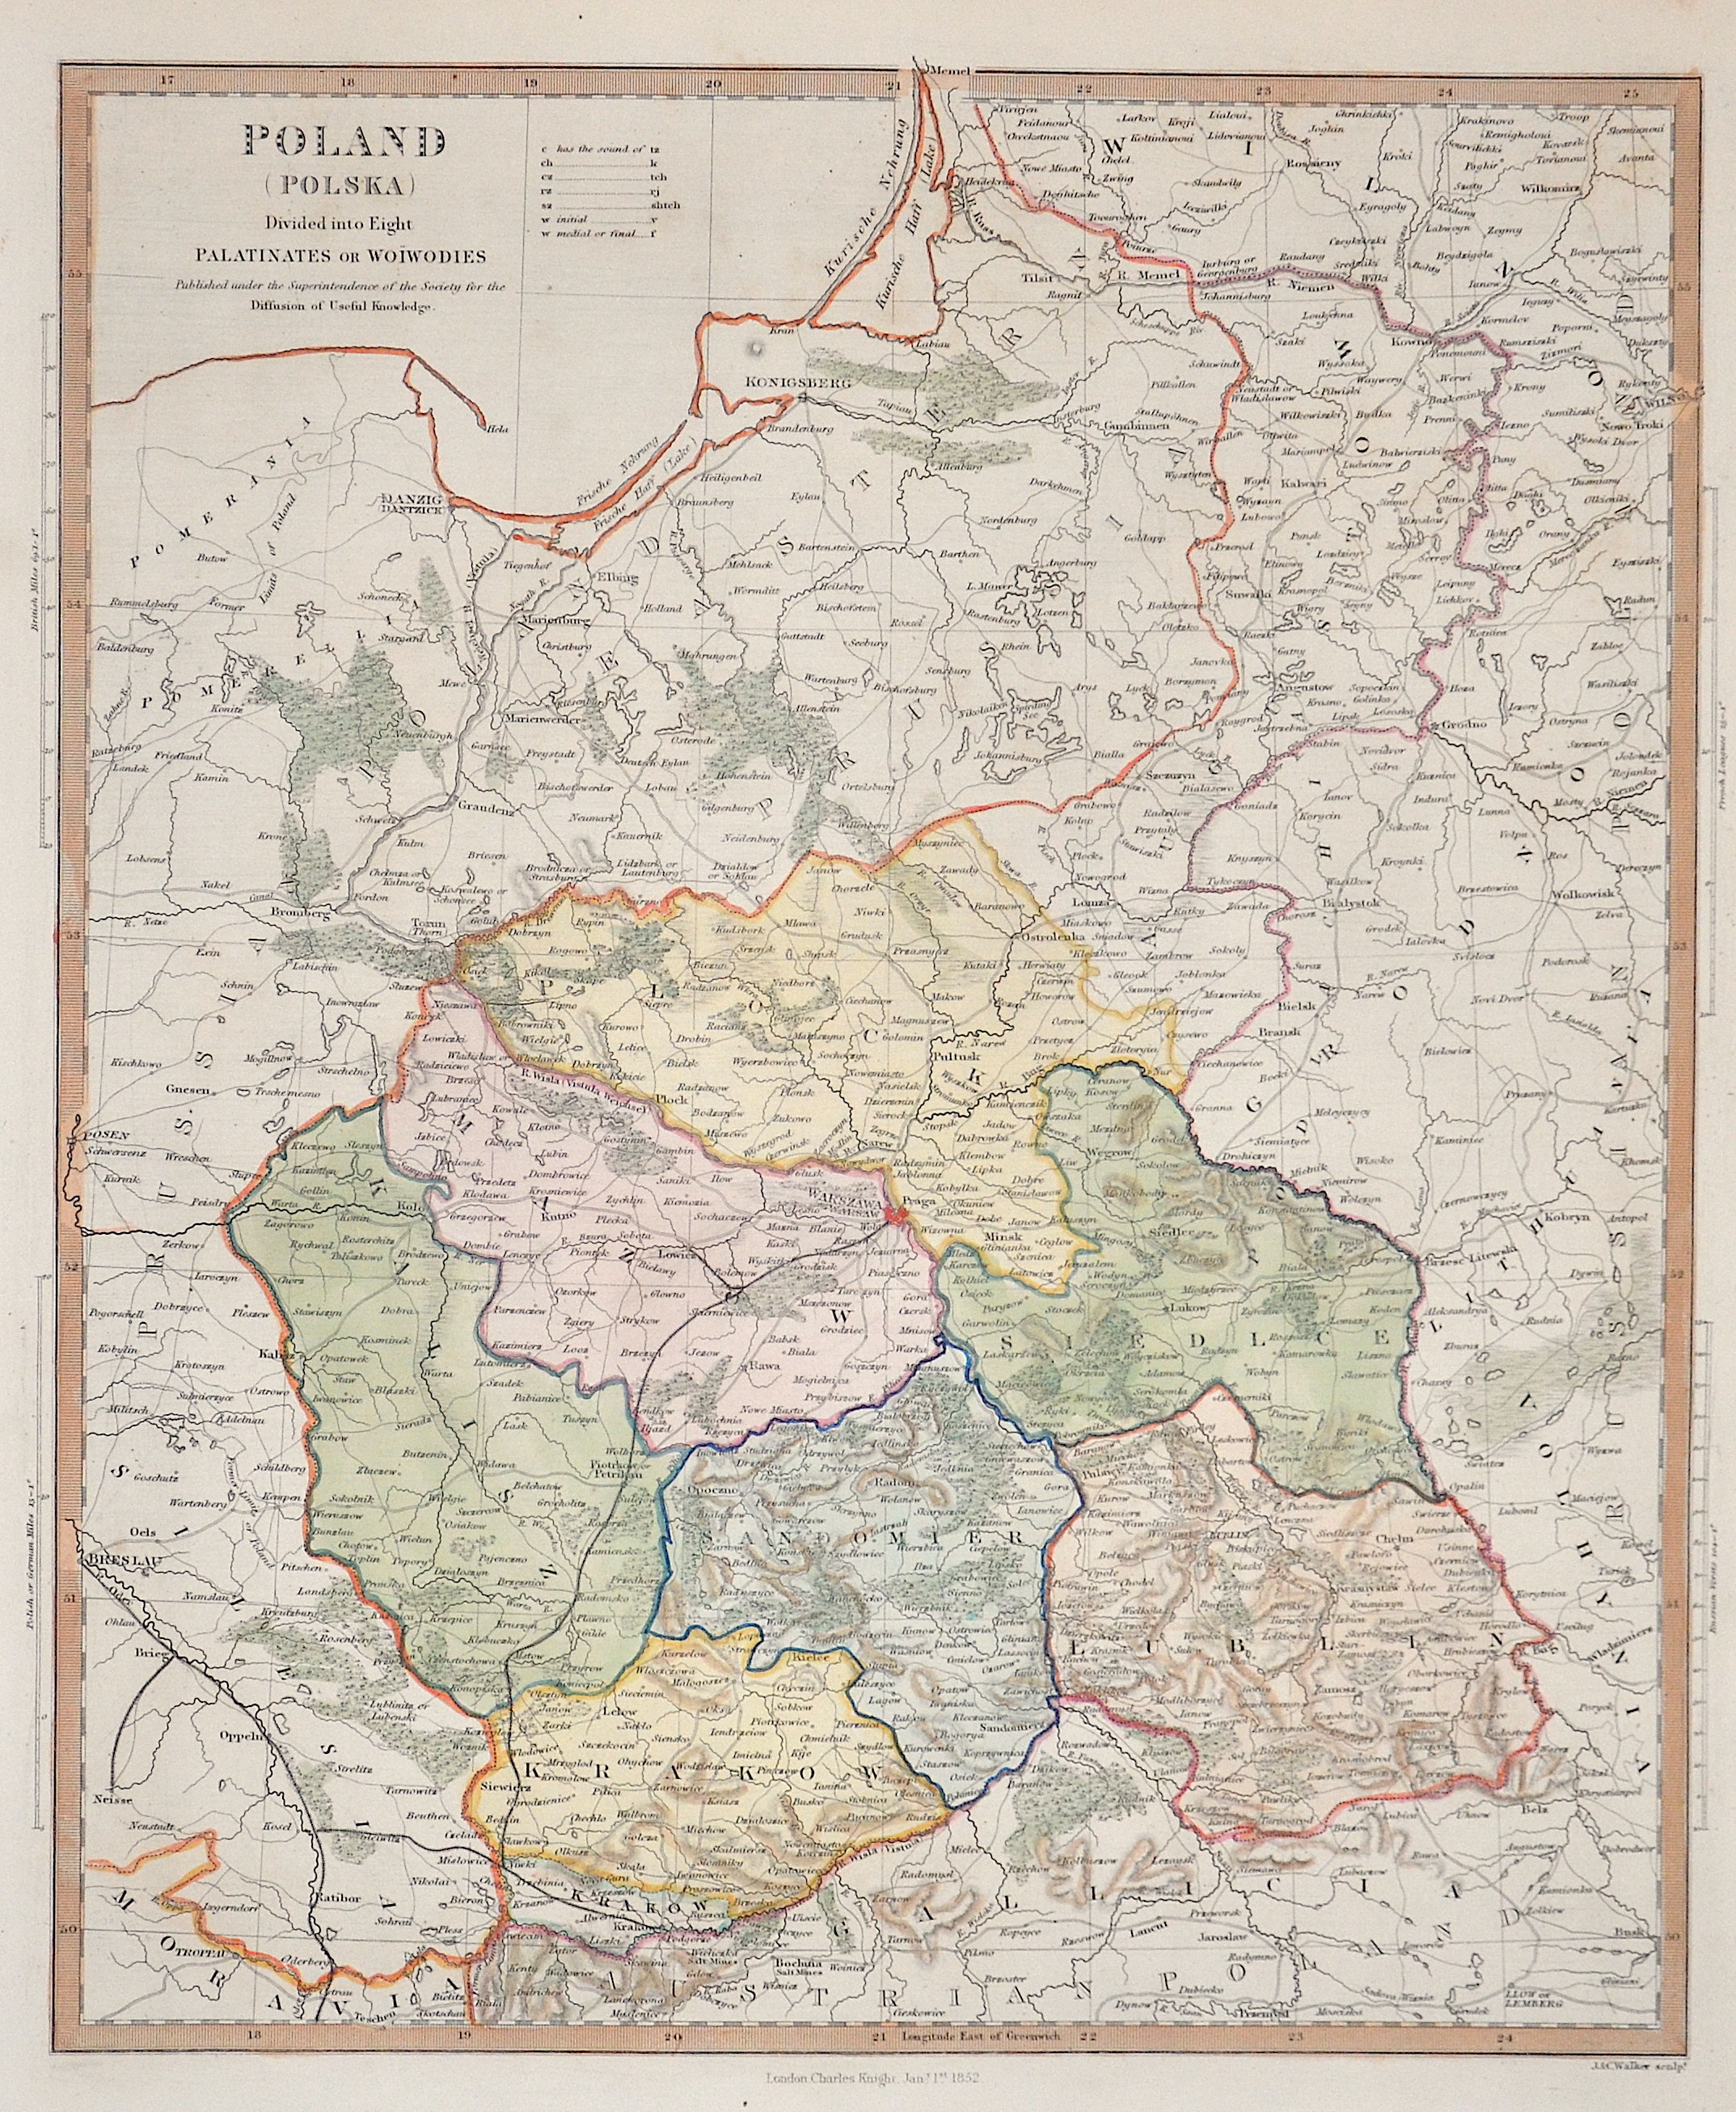 Walker John/C. Poland (Polska) Divided into Eight Palatinates or Woiwodies